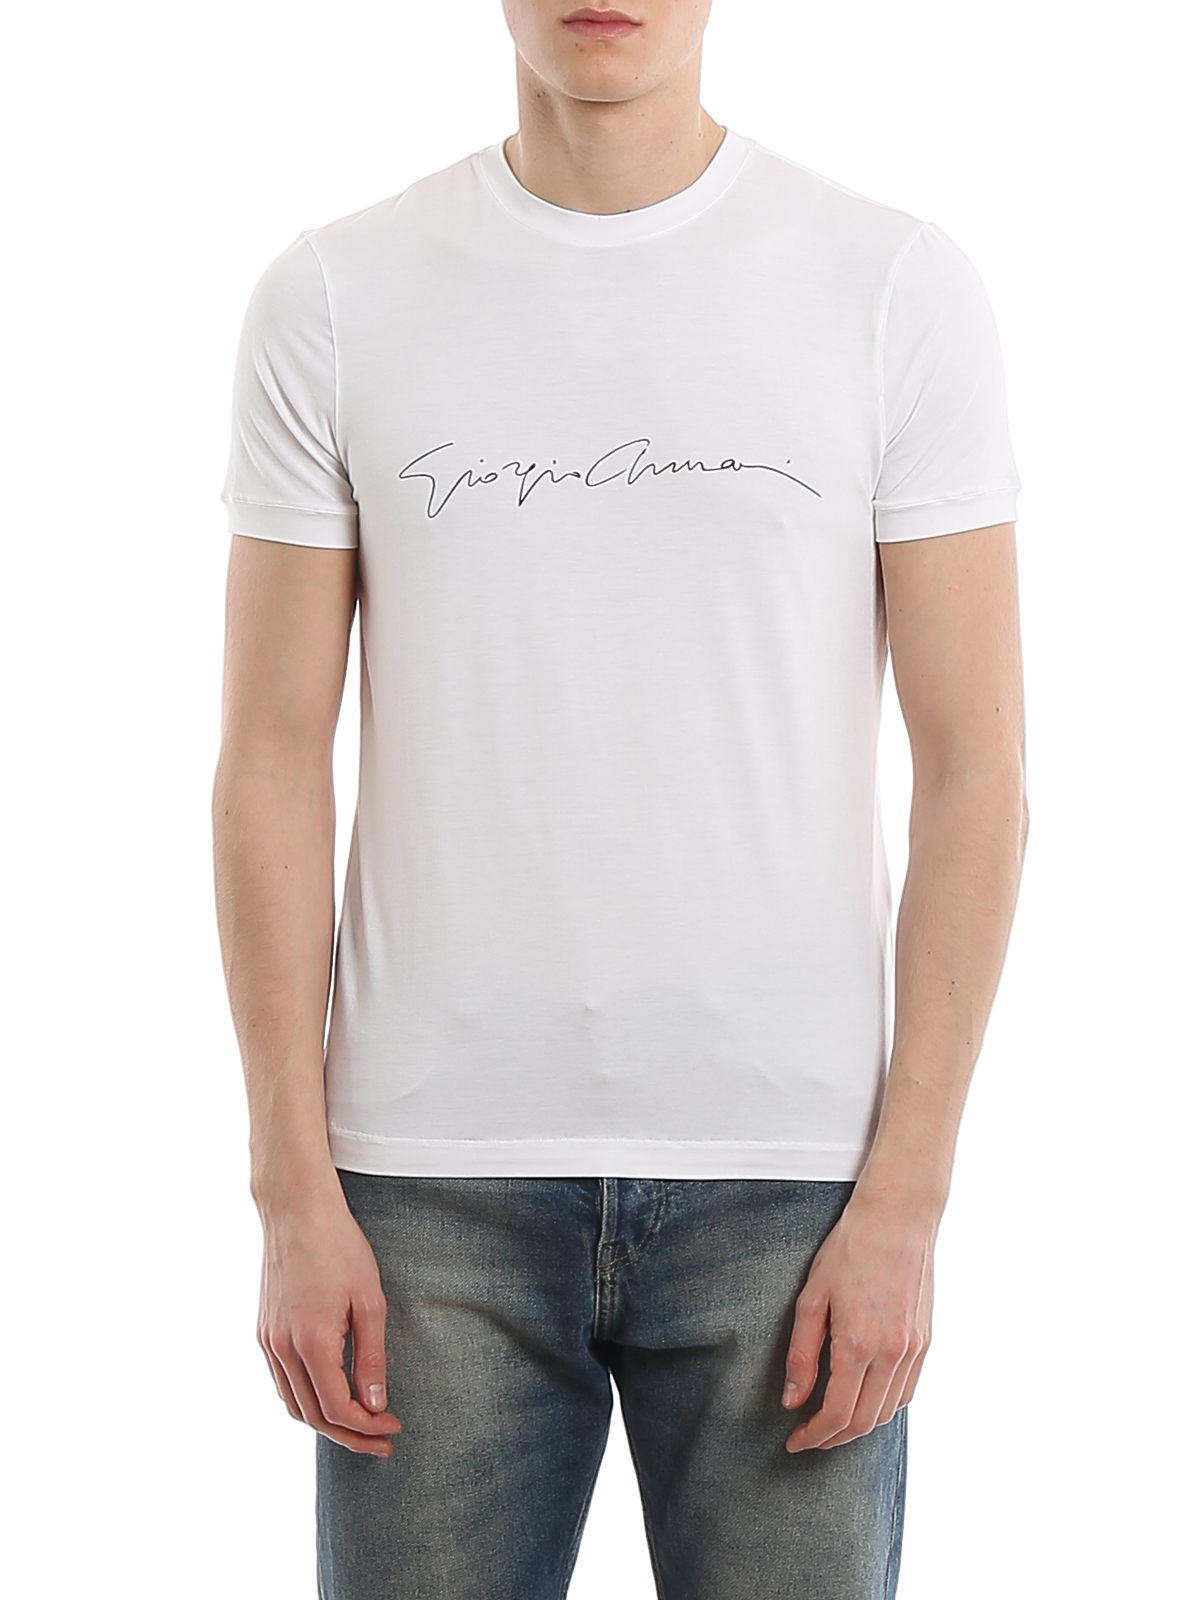 Giorgio Armani T Shirt 95 Online, SAVE 56%.